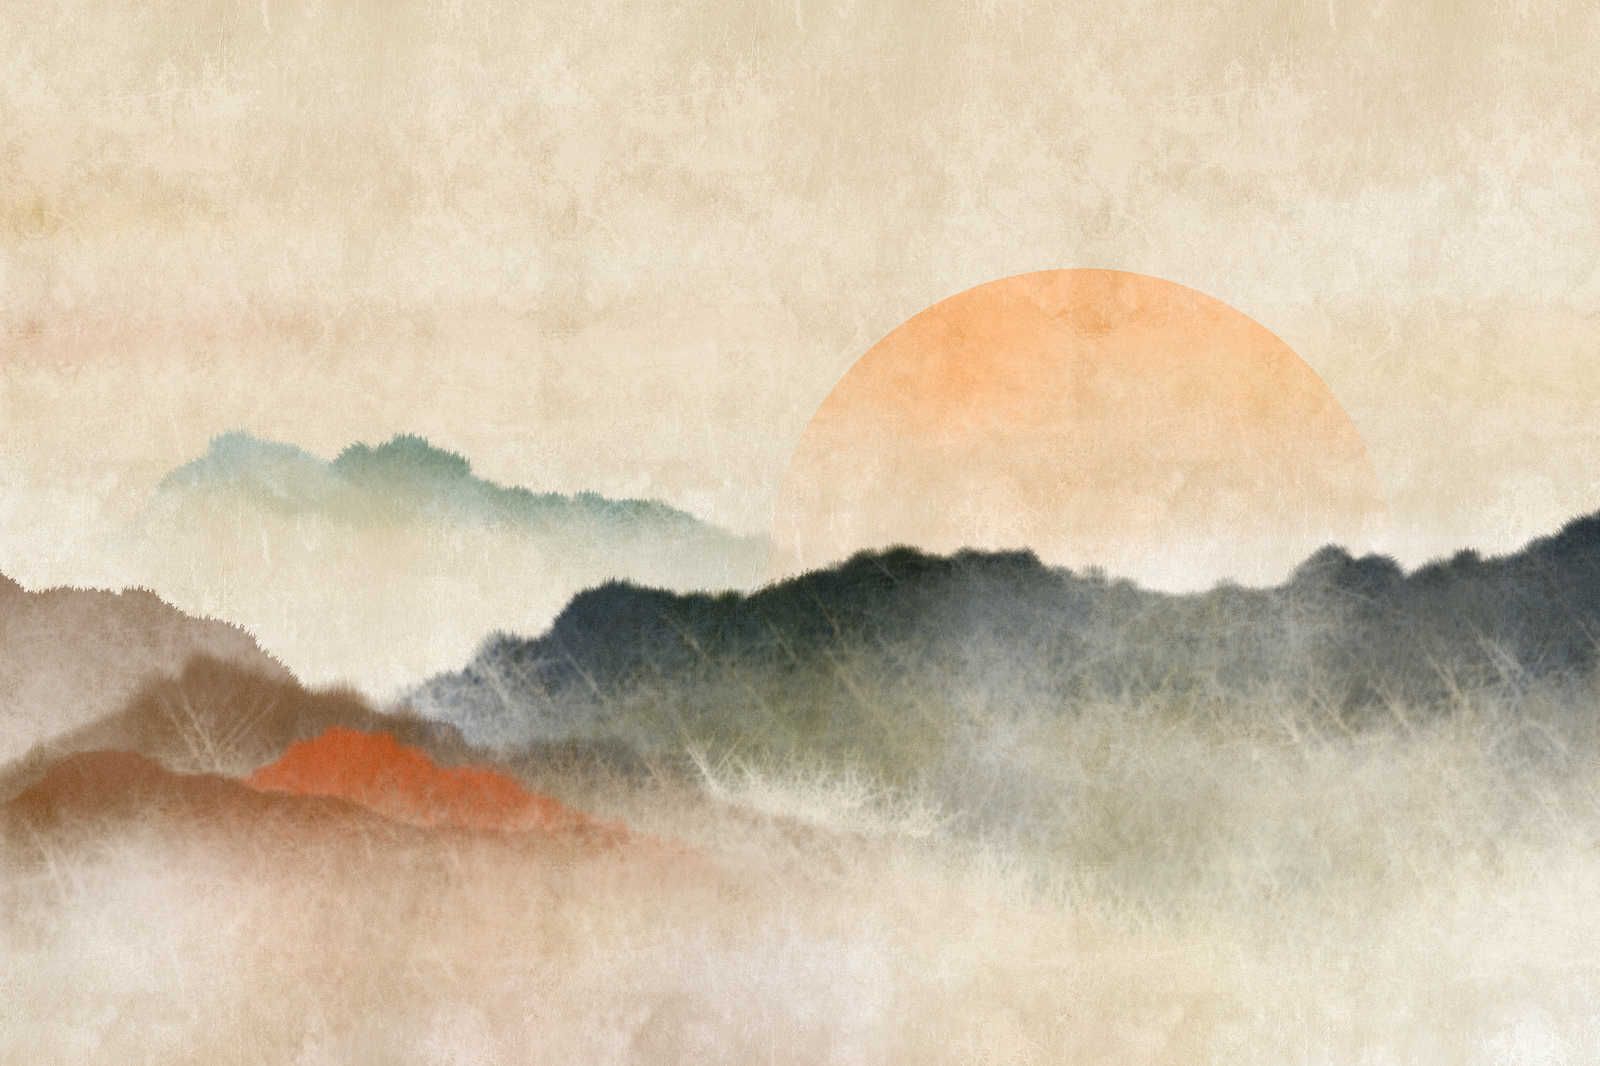             Akaishi 3 - Canvas schilderij Sunrise, Asia Style Art Print - 0.90 m x 0.60 m
        